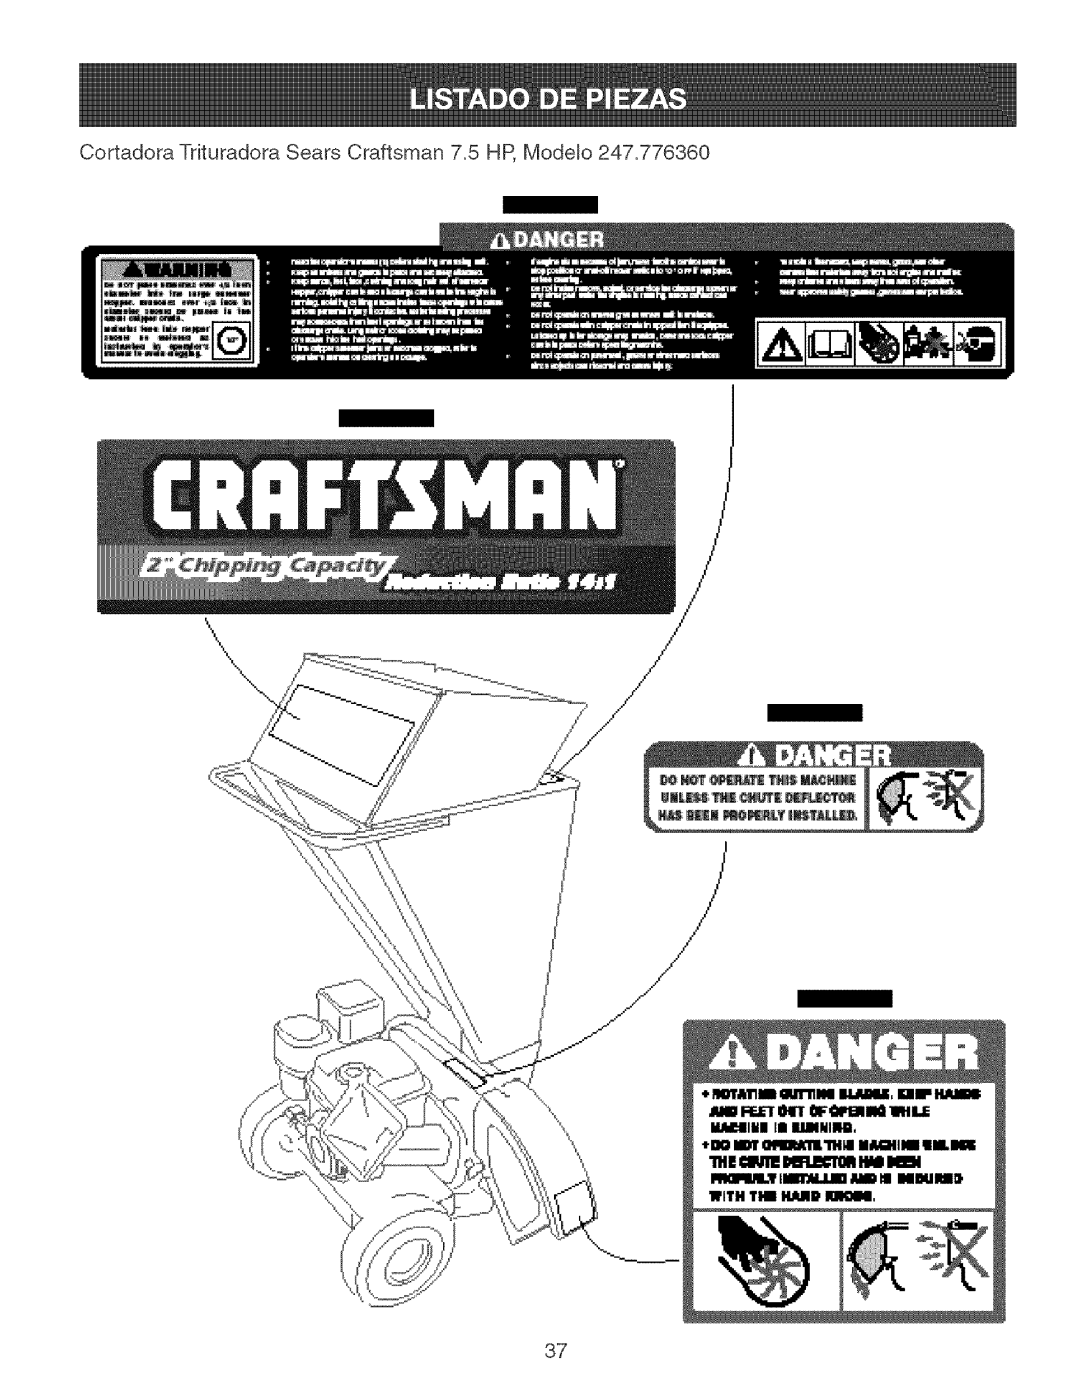 Craftsman 247.776360 manual 